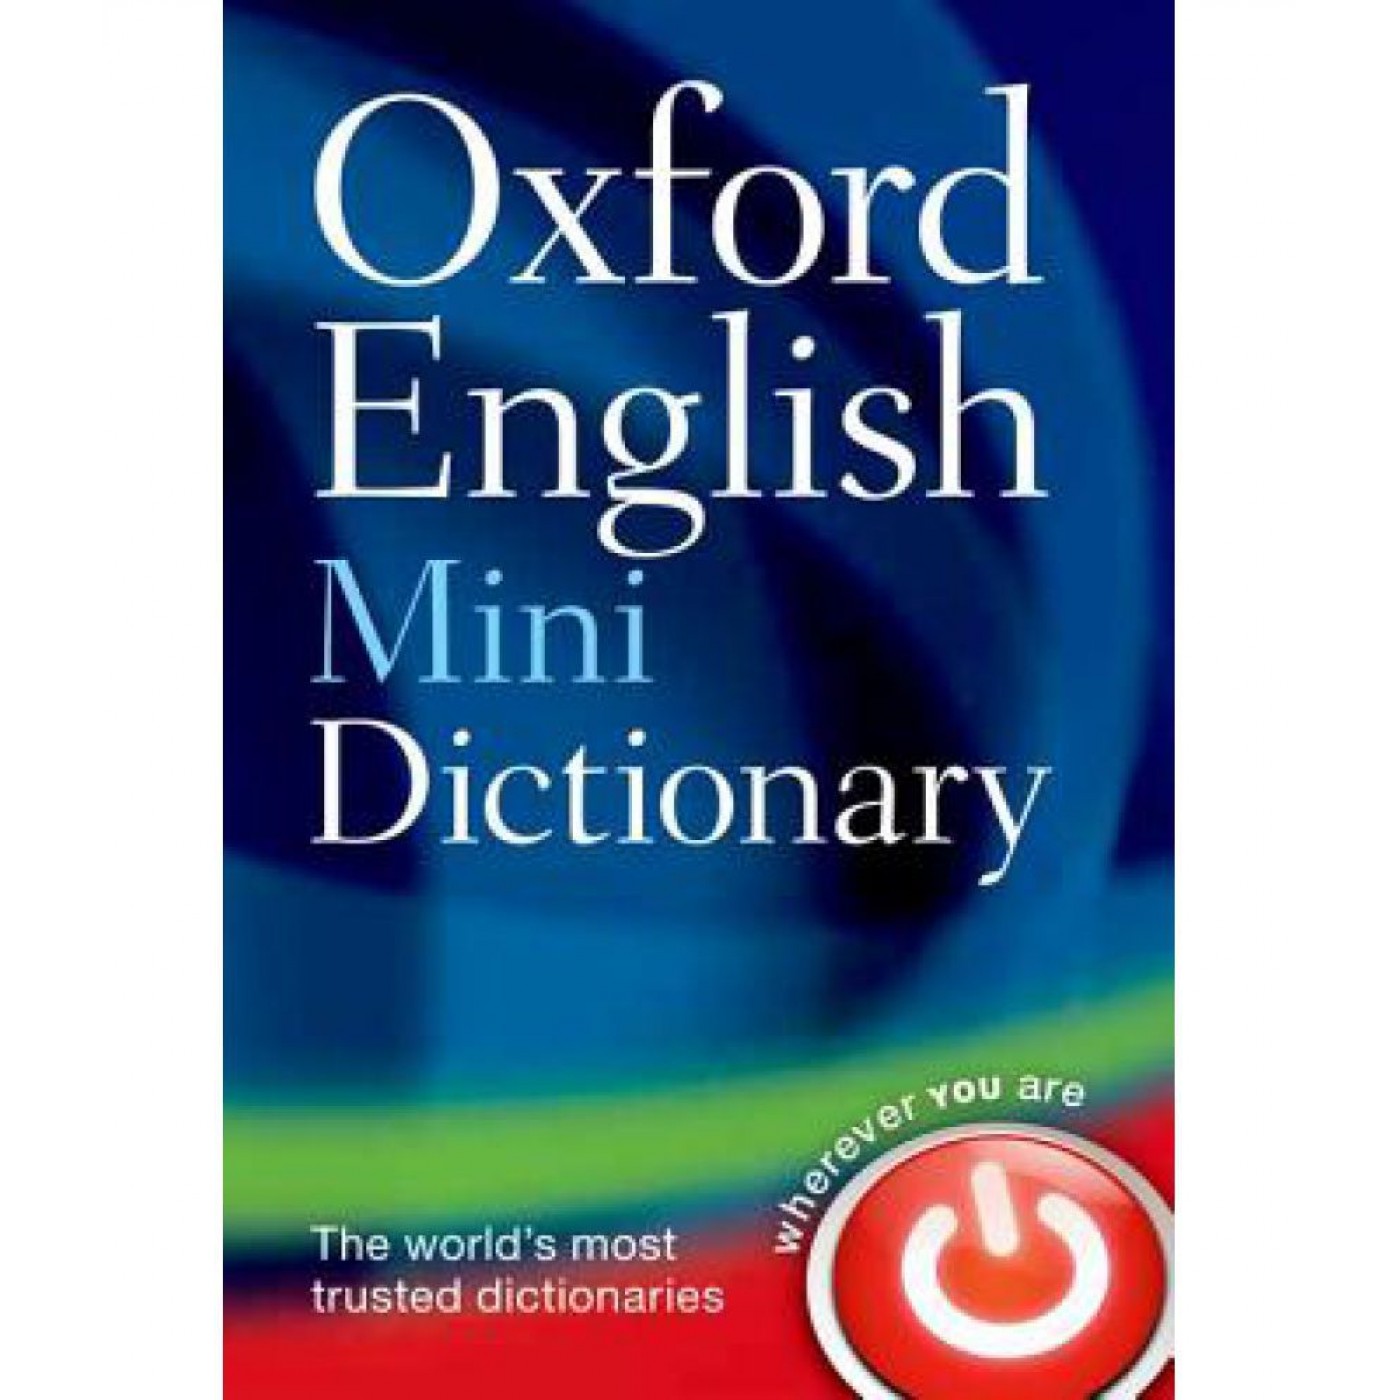 paraphrasing oxford english dictionary